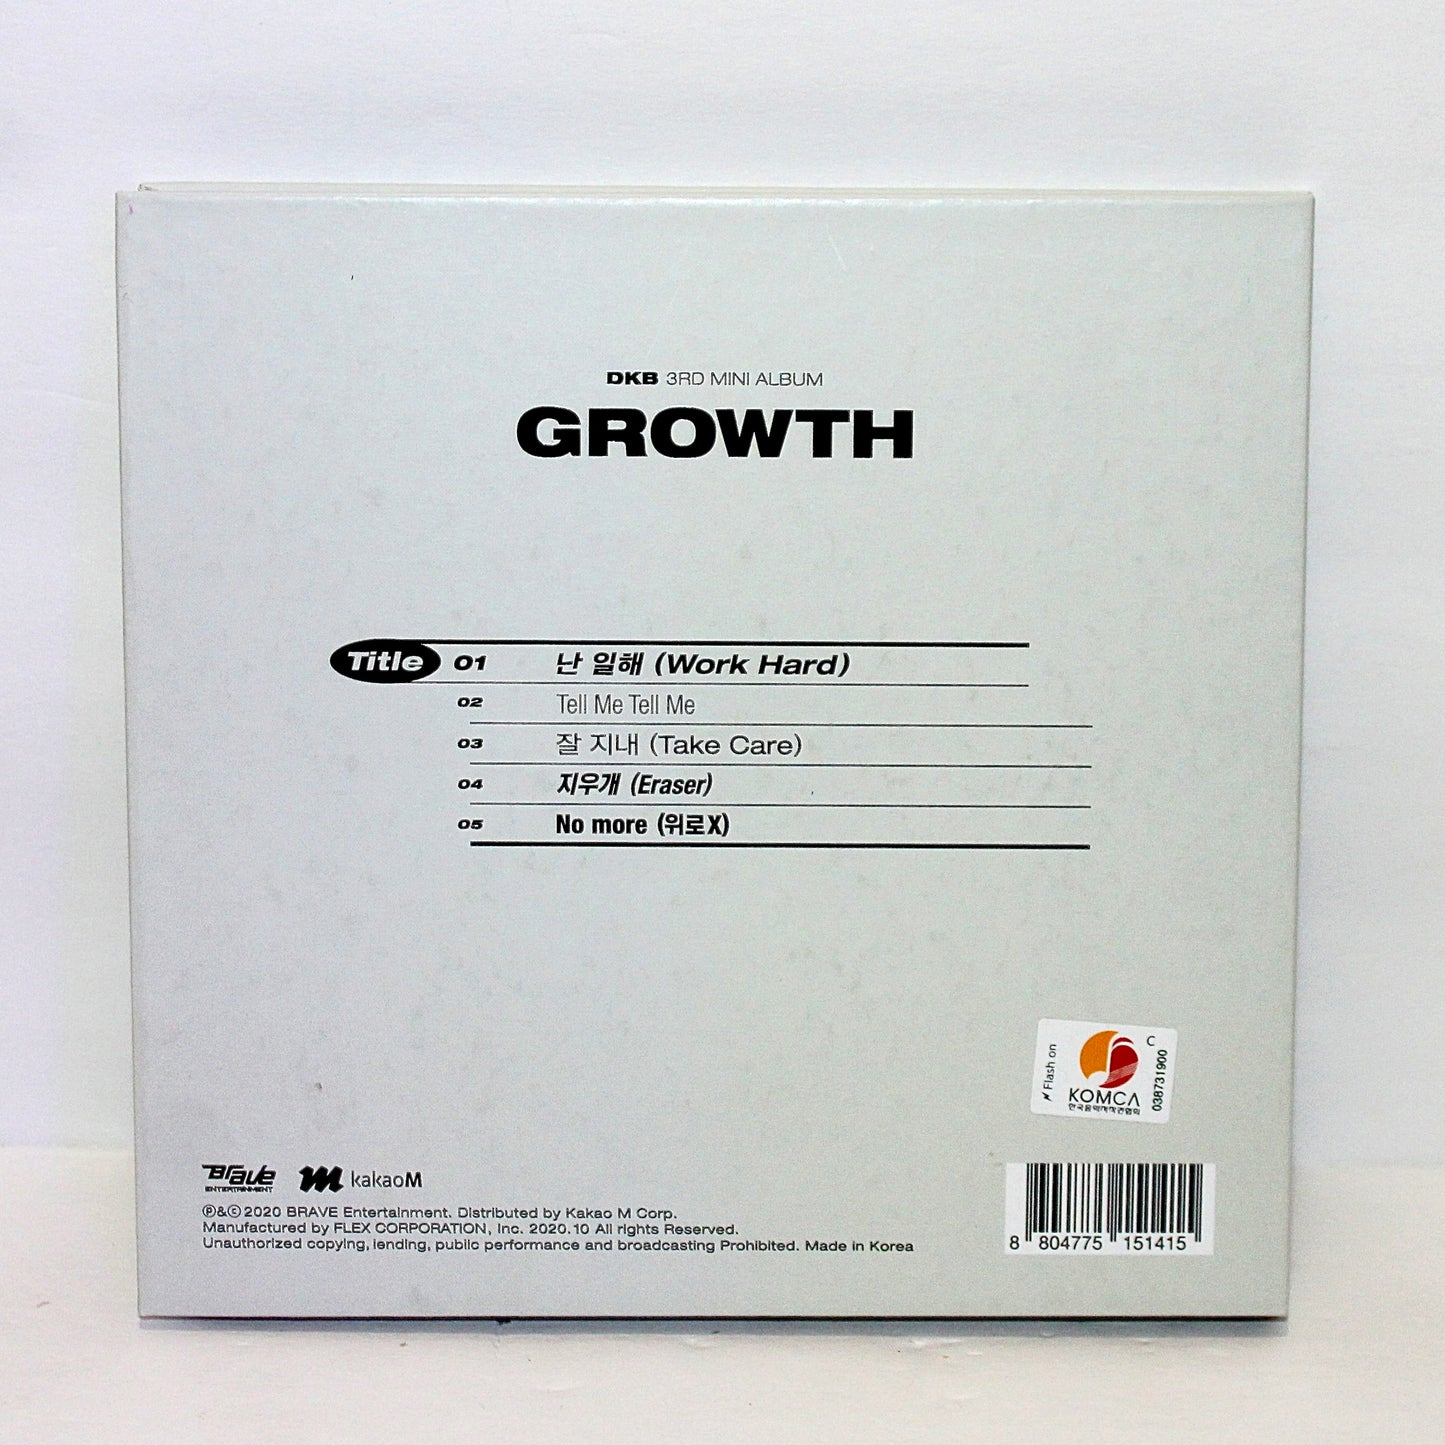 DKB 3rd Mini Album: Growth